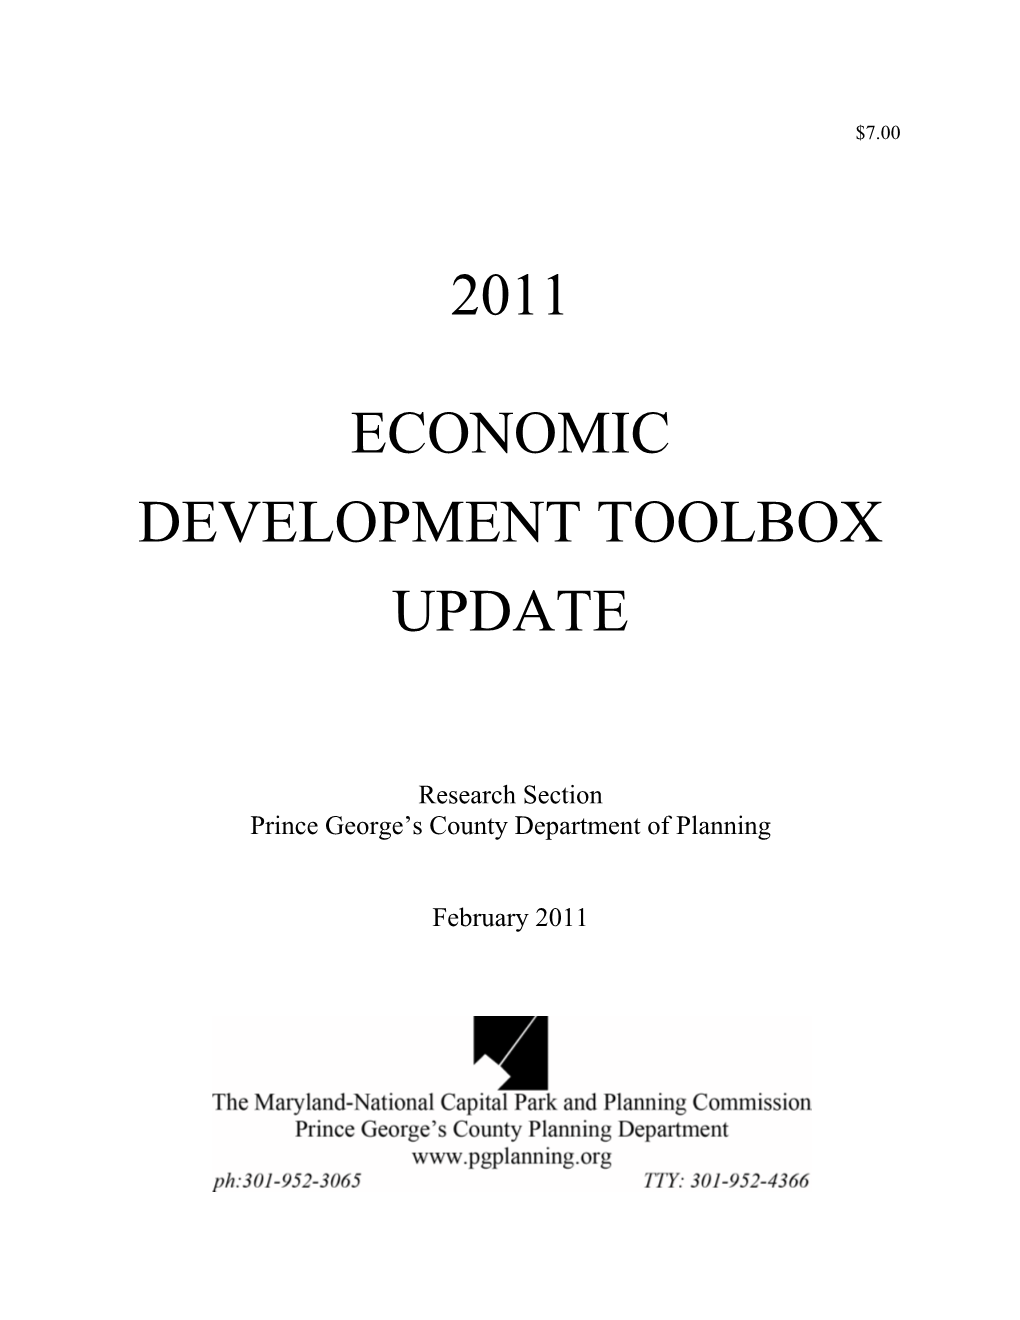 2011 Economic Development Toolbox Updates the 2008 Toolbox